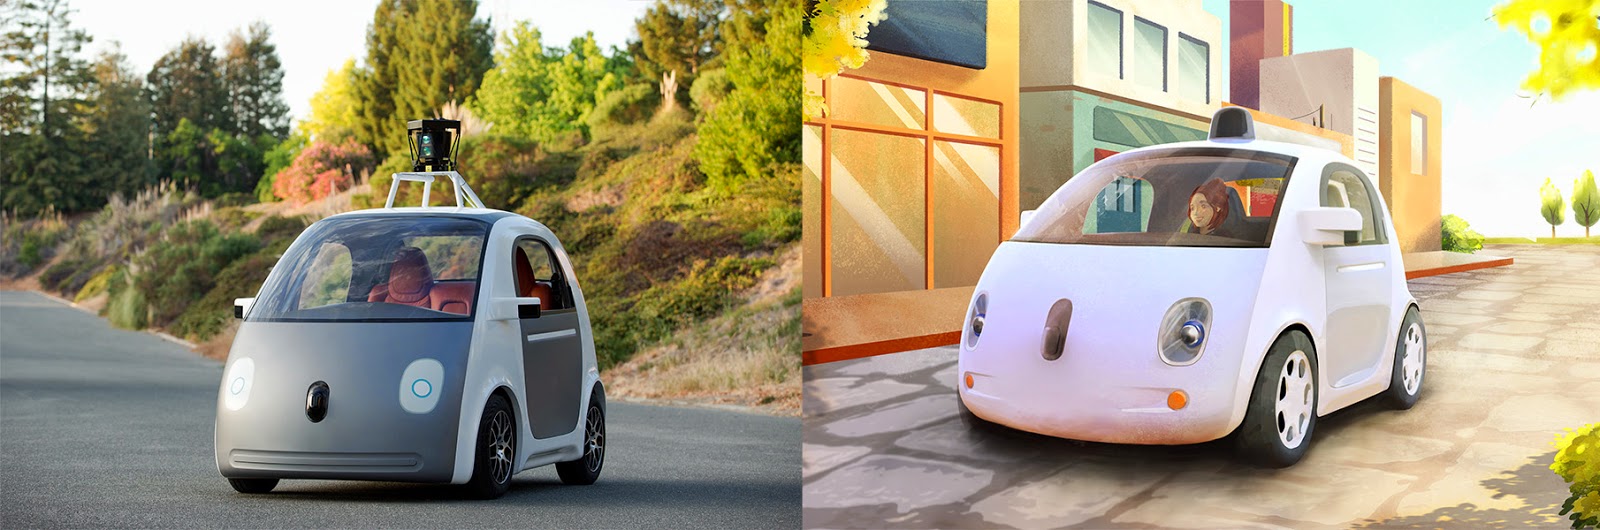 Google's selfdriving electric car shown to public Electrek